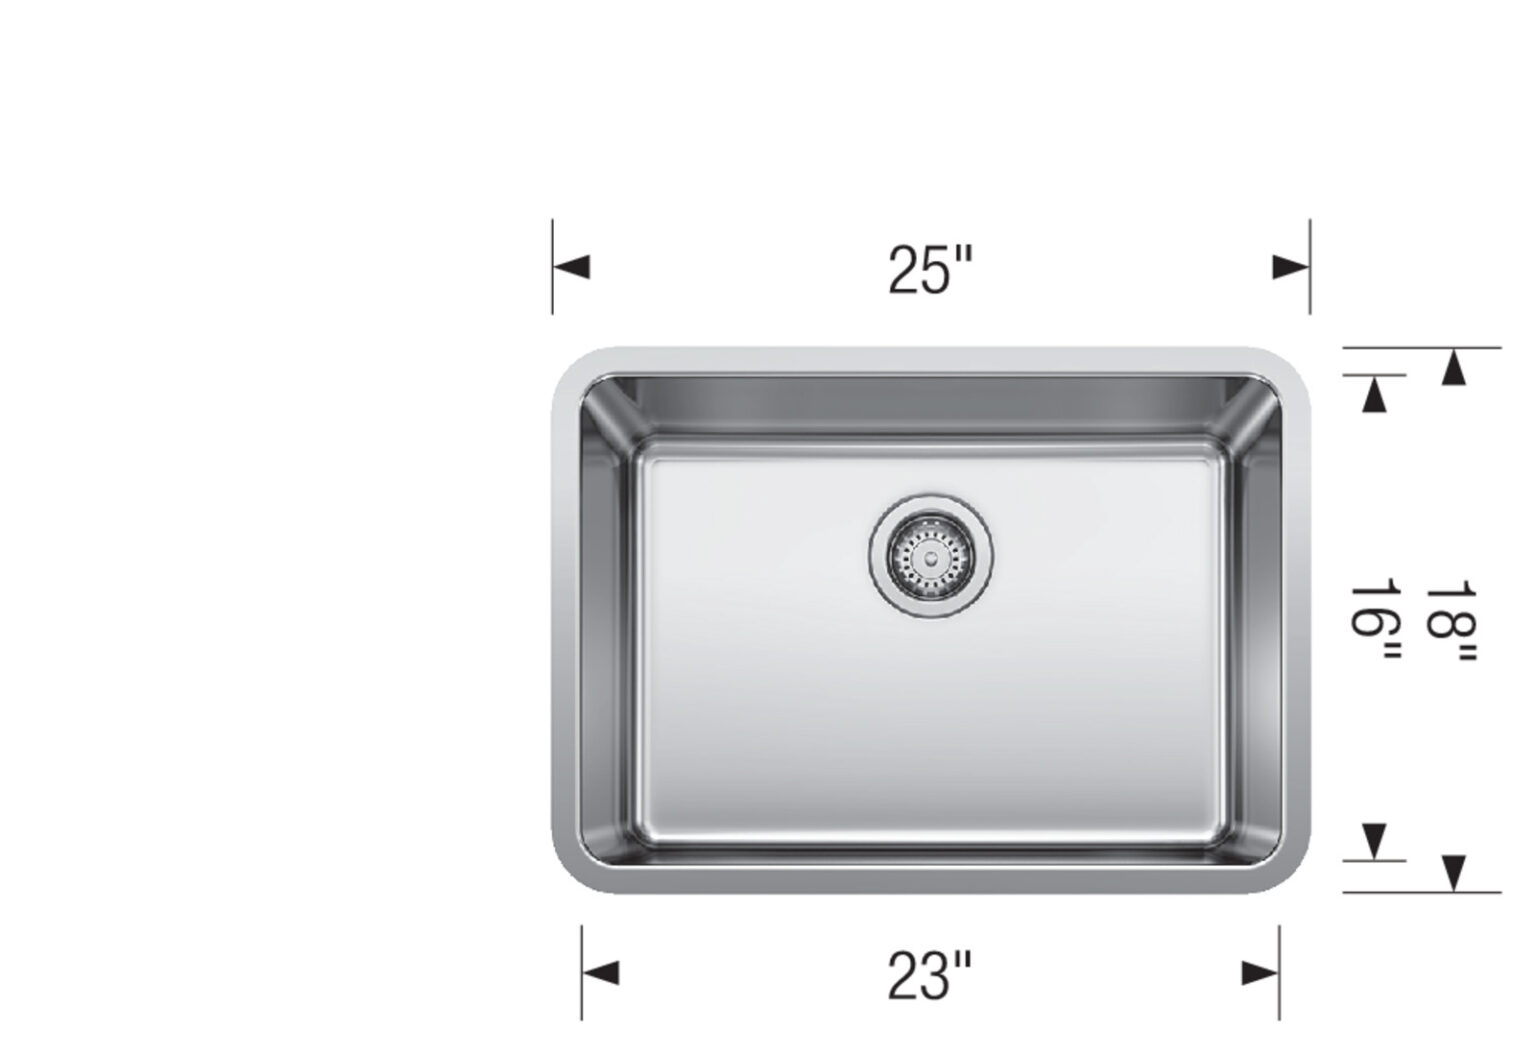 442766 Formera 25 Medium Single Stainless Kitchen Sink with Measurments TD1 Taps Depot Ltd.